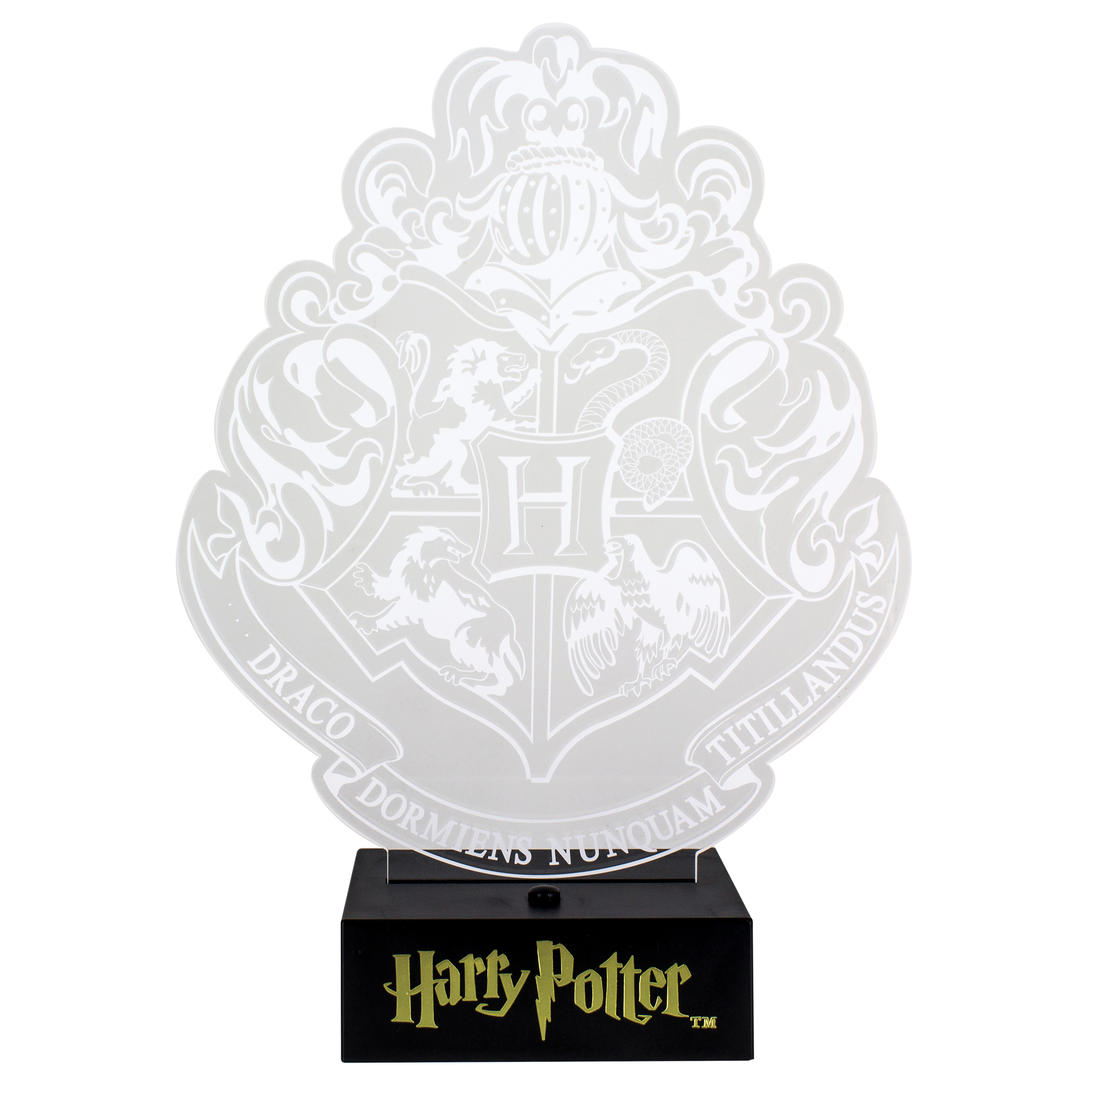 Harry potter(3)